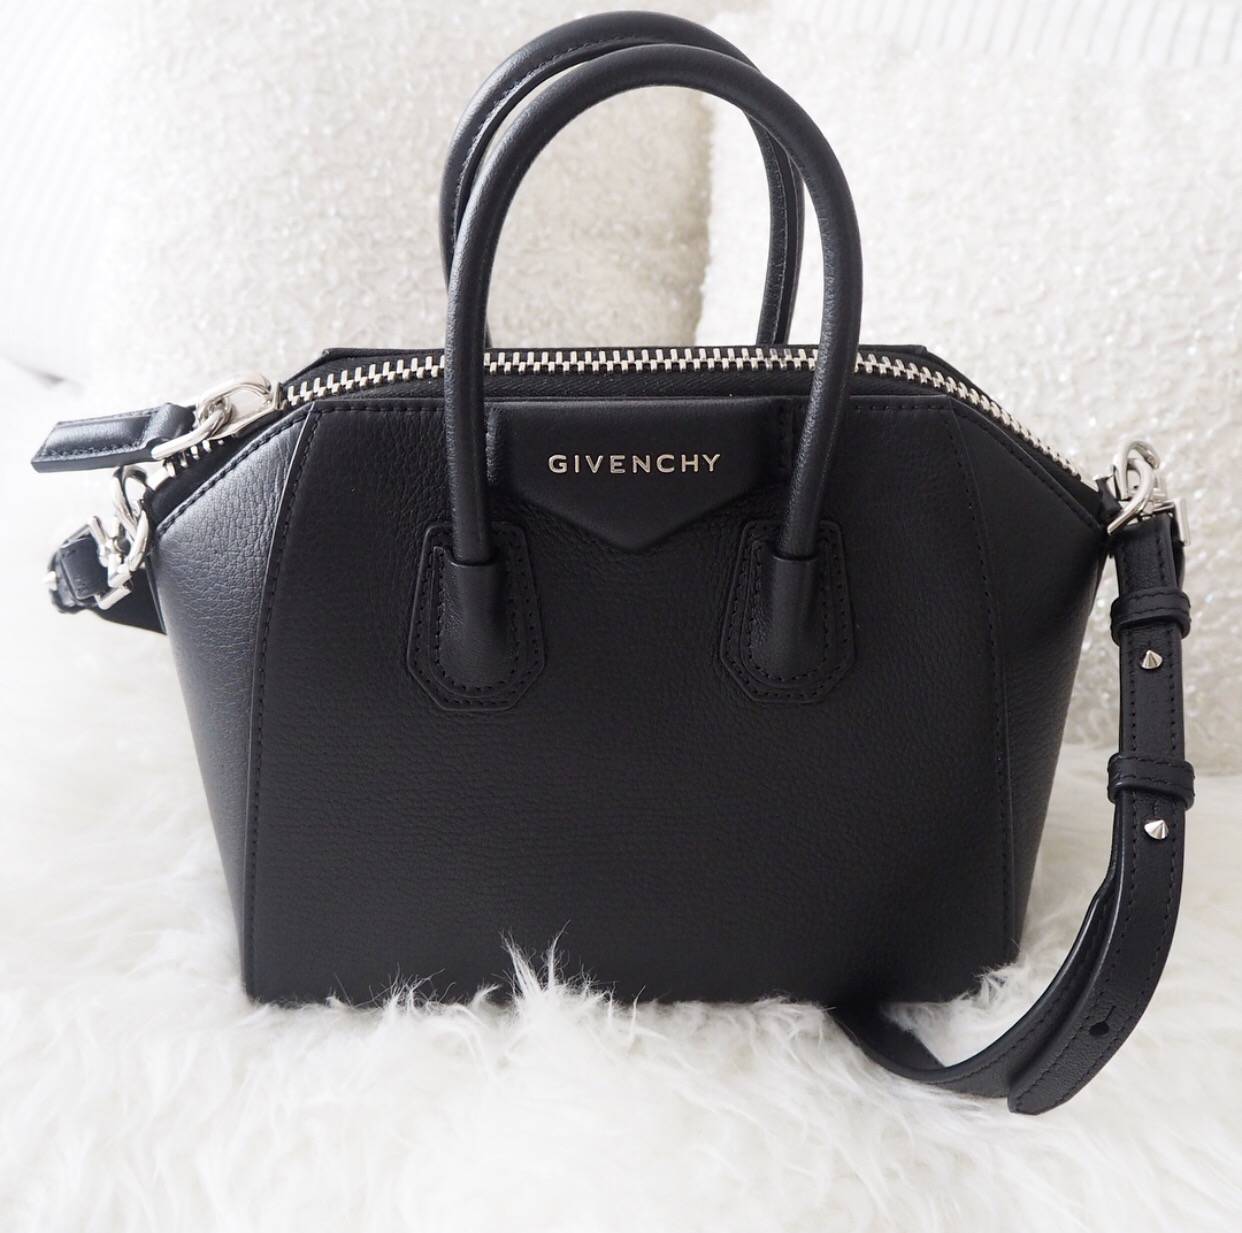 Givenchy Antigona Mini in Black Textured Leather - Stephanie Jayne - Beauty, fashion & lifestyle